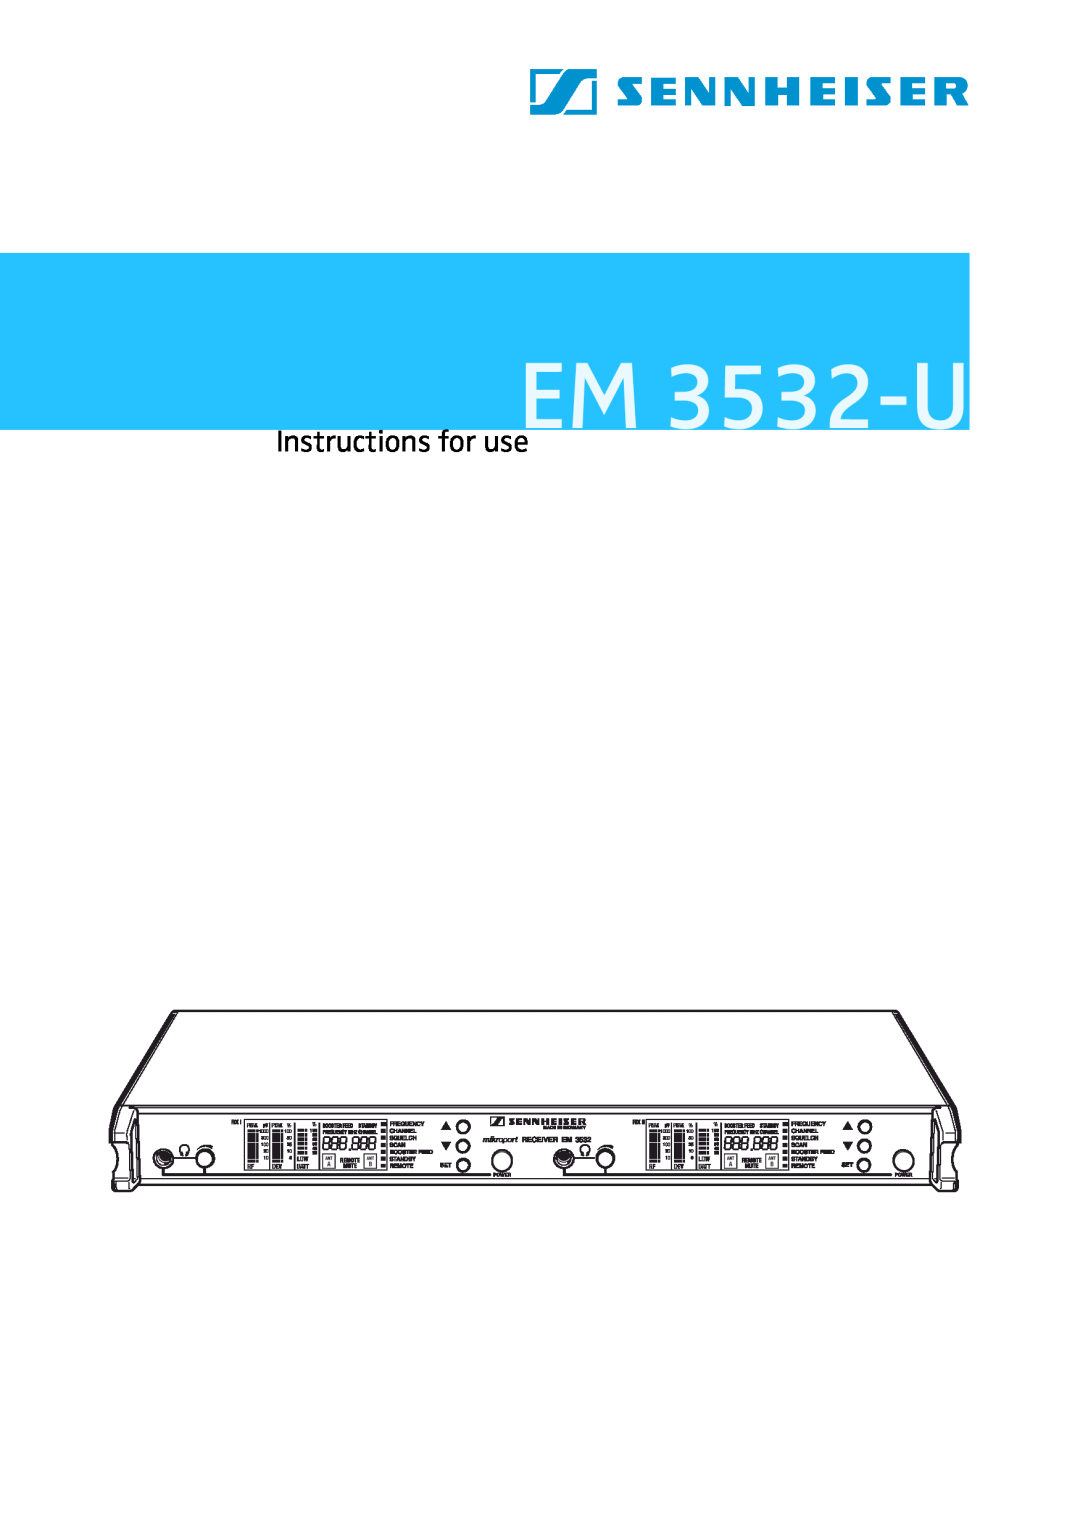 Sennheiser EM 3532-U manual Instructions for use 